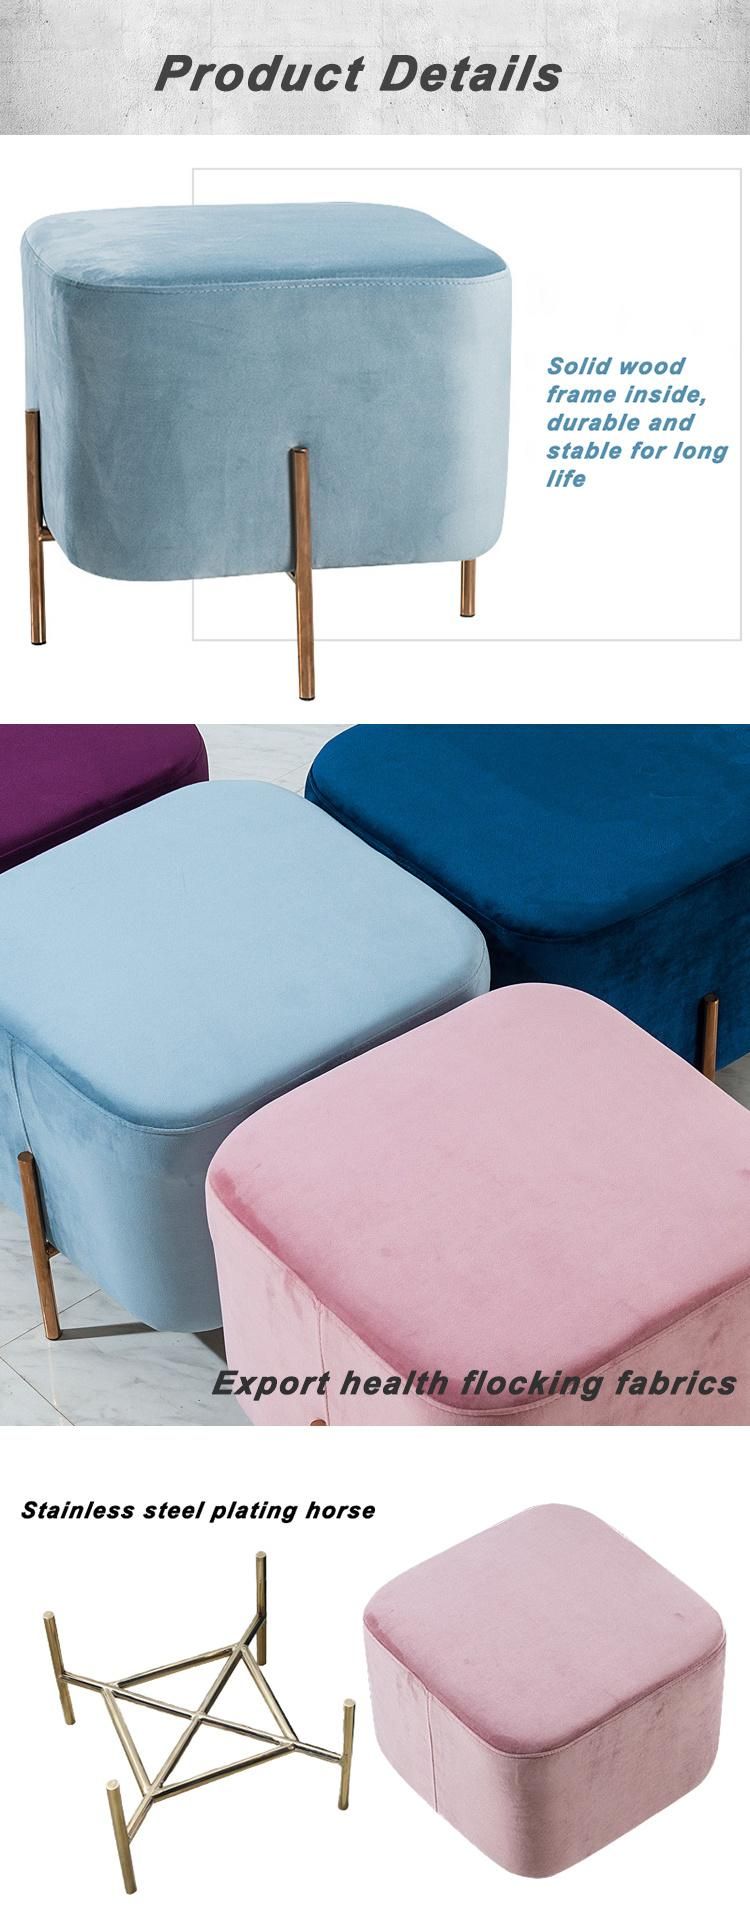 Modern Grey Square Upholstered Footstool Solid Gold Metal Legs Fabric Velvet Stool Ottoman for Home Living Room